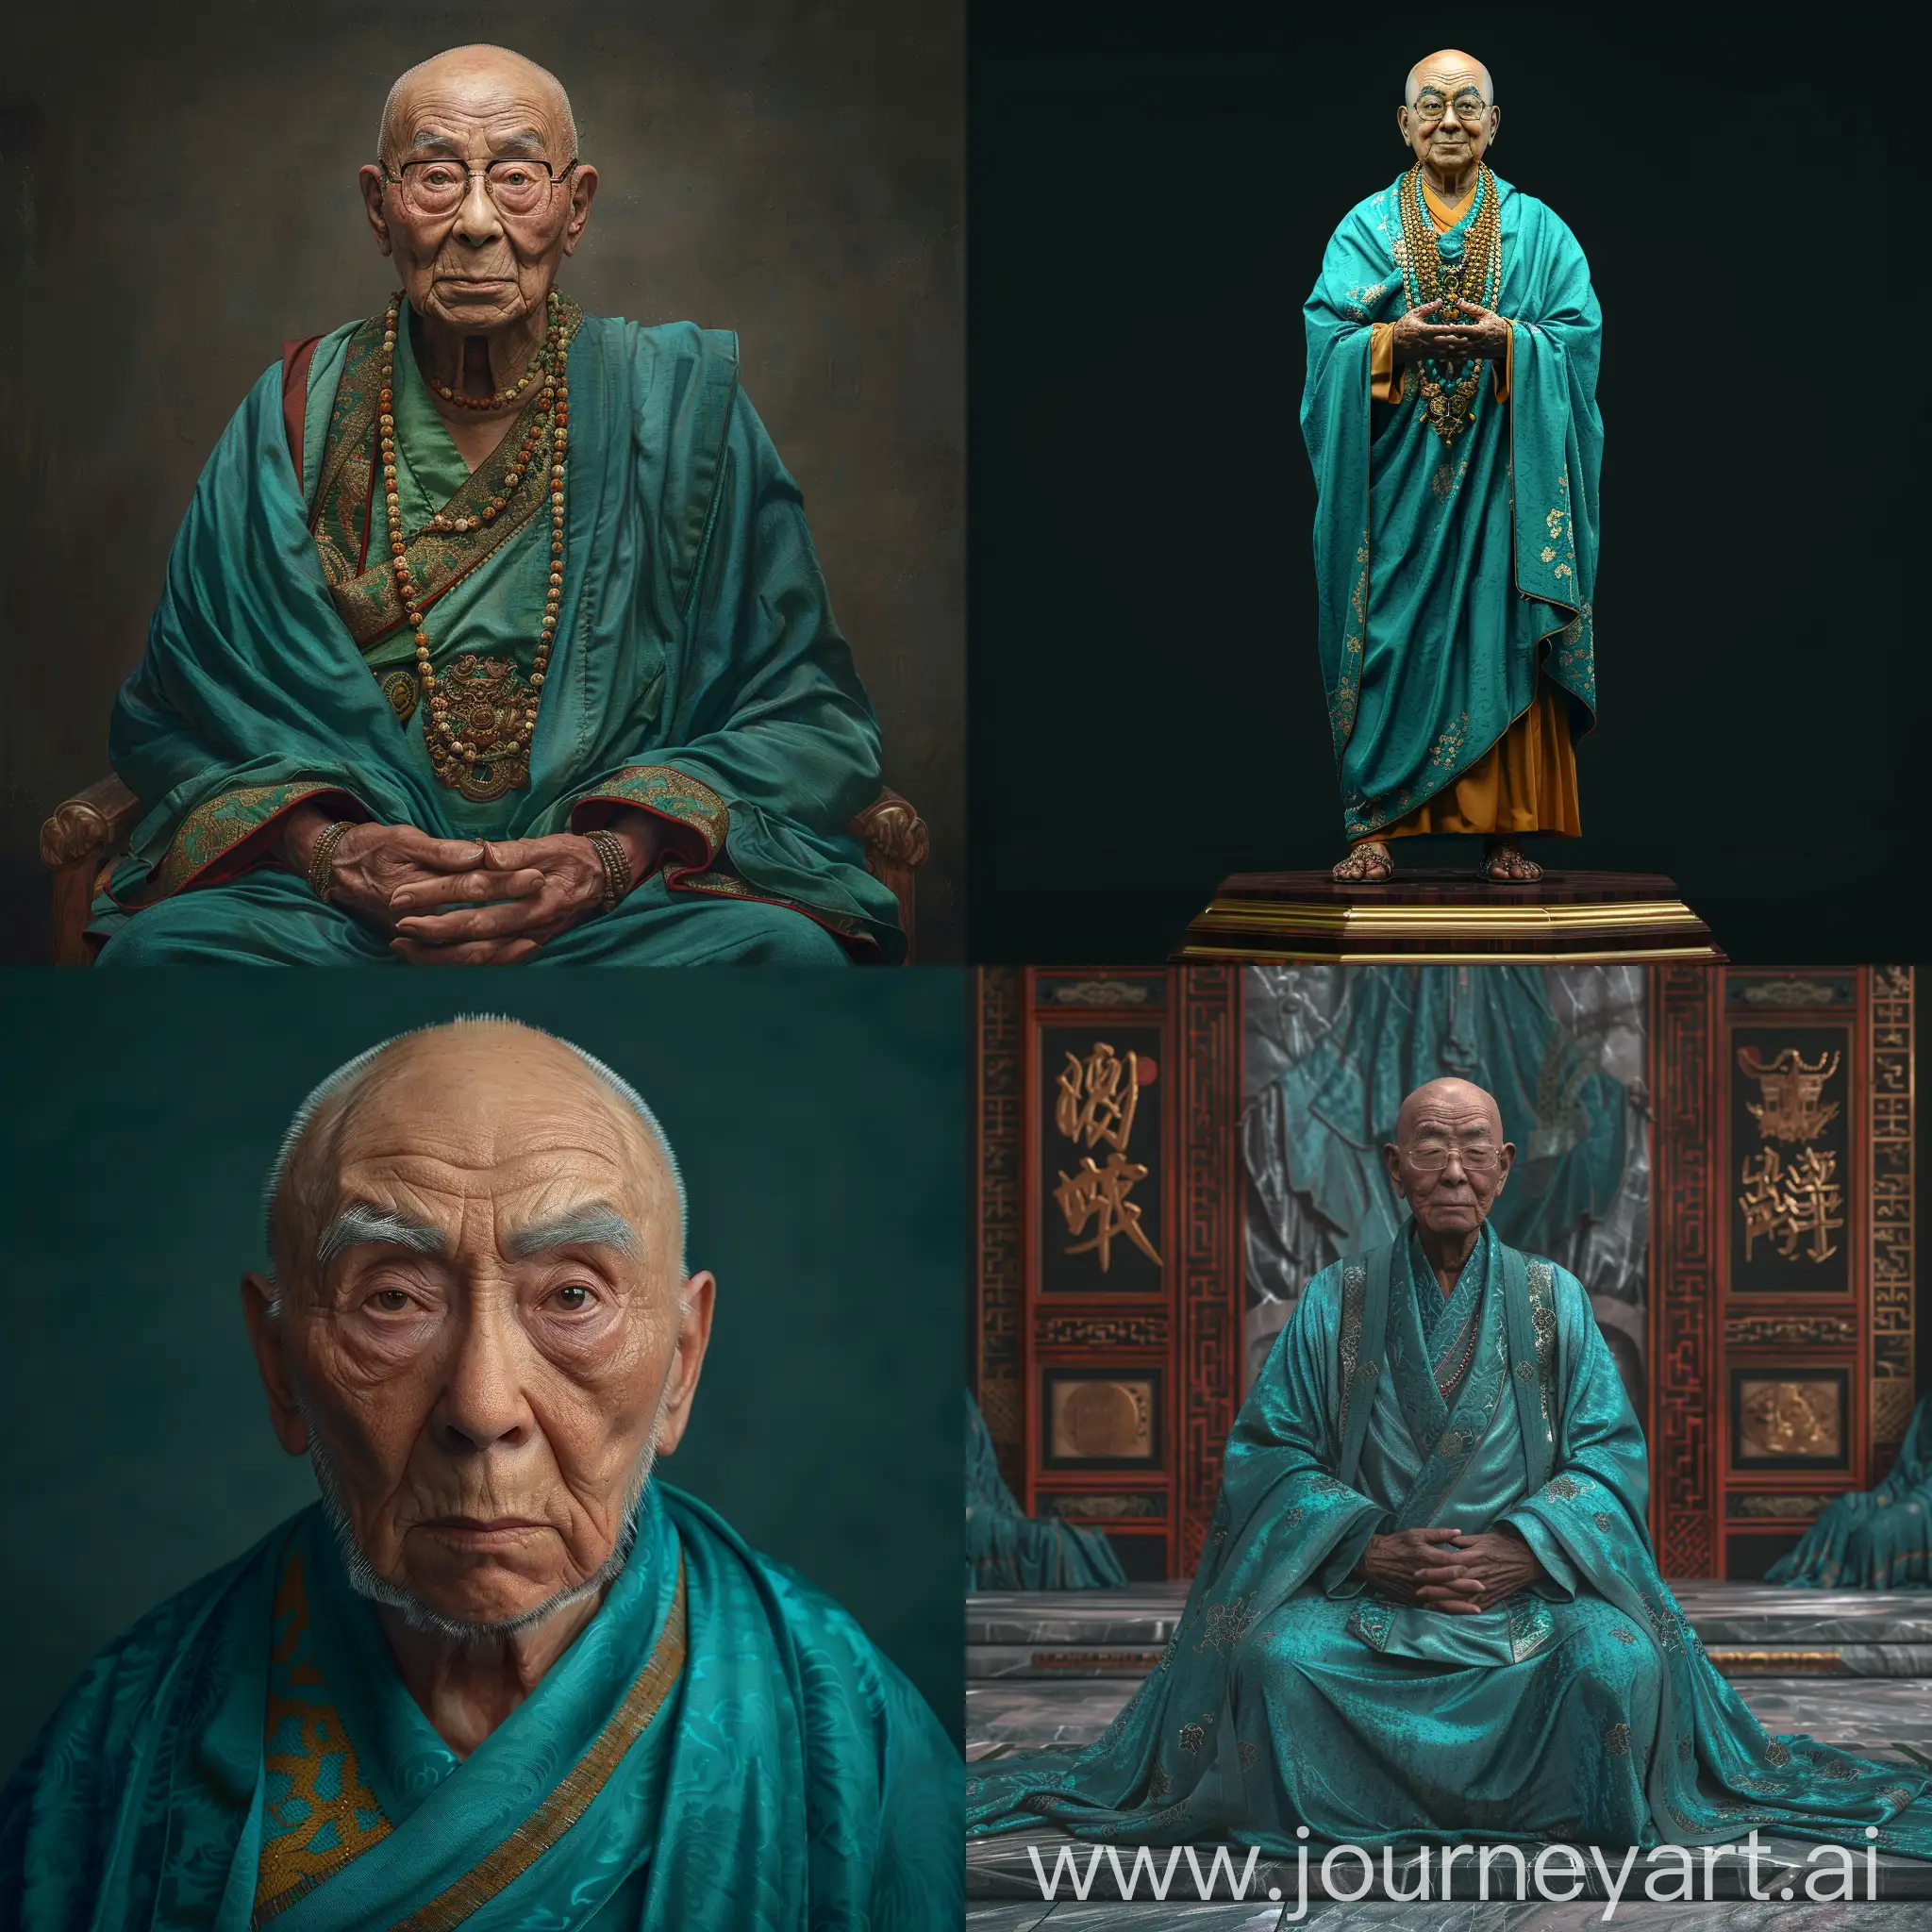 Kalmyk-Dalai-Lama-in-Turquoise-Robes-HyperRealistic-Portrait-in-Ultra-HD